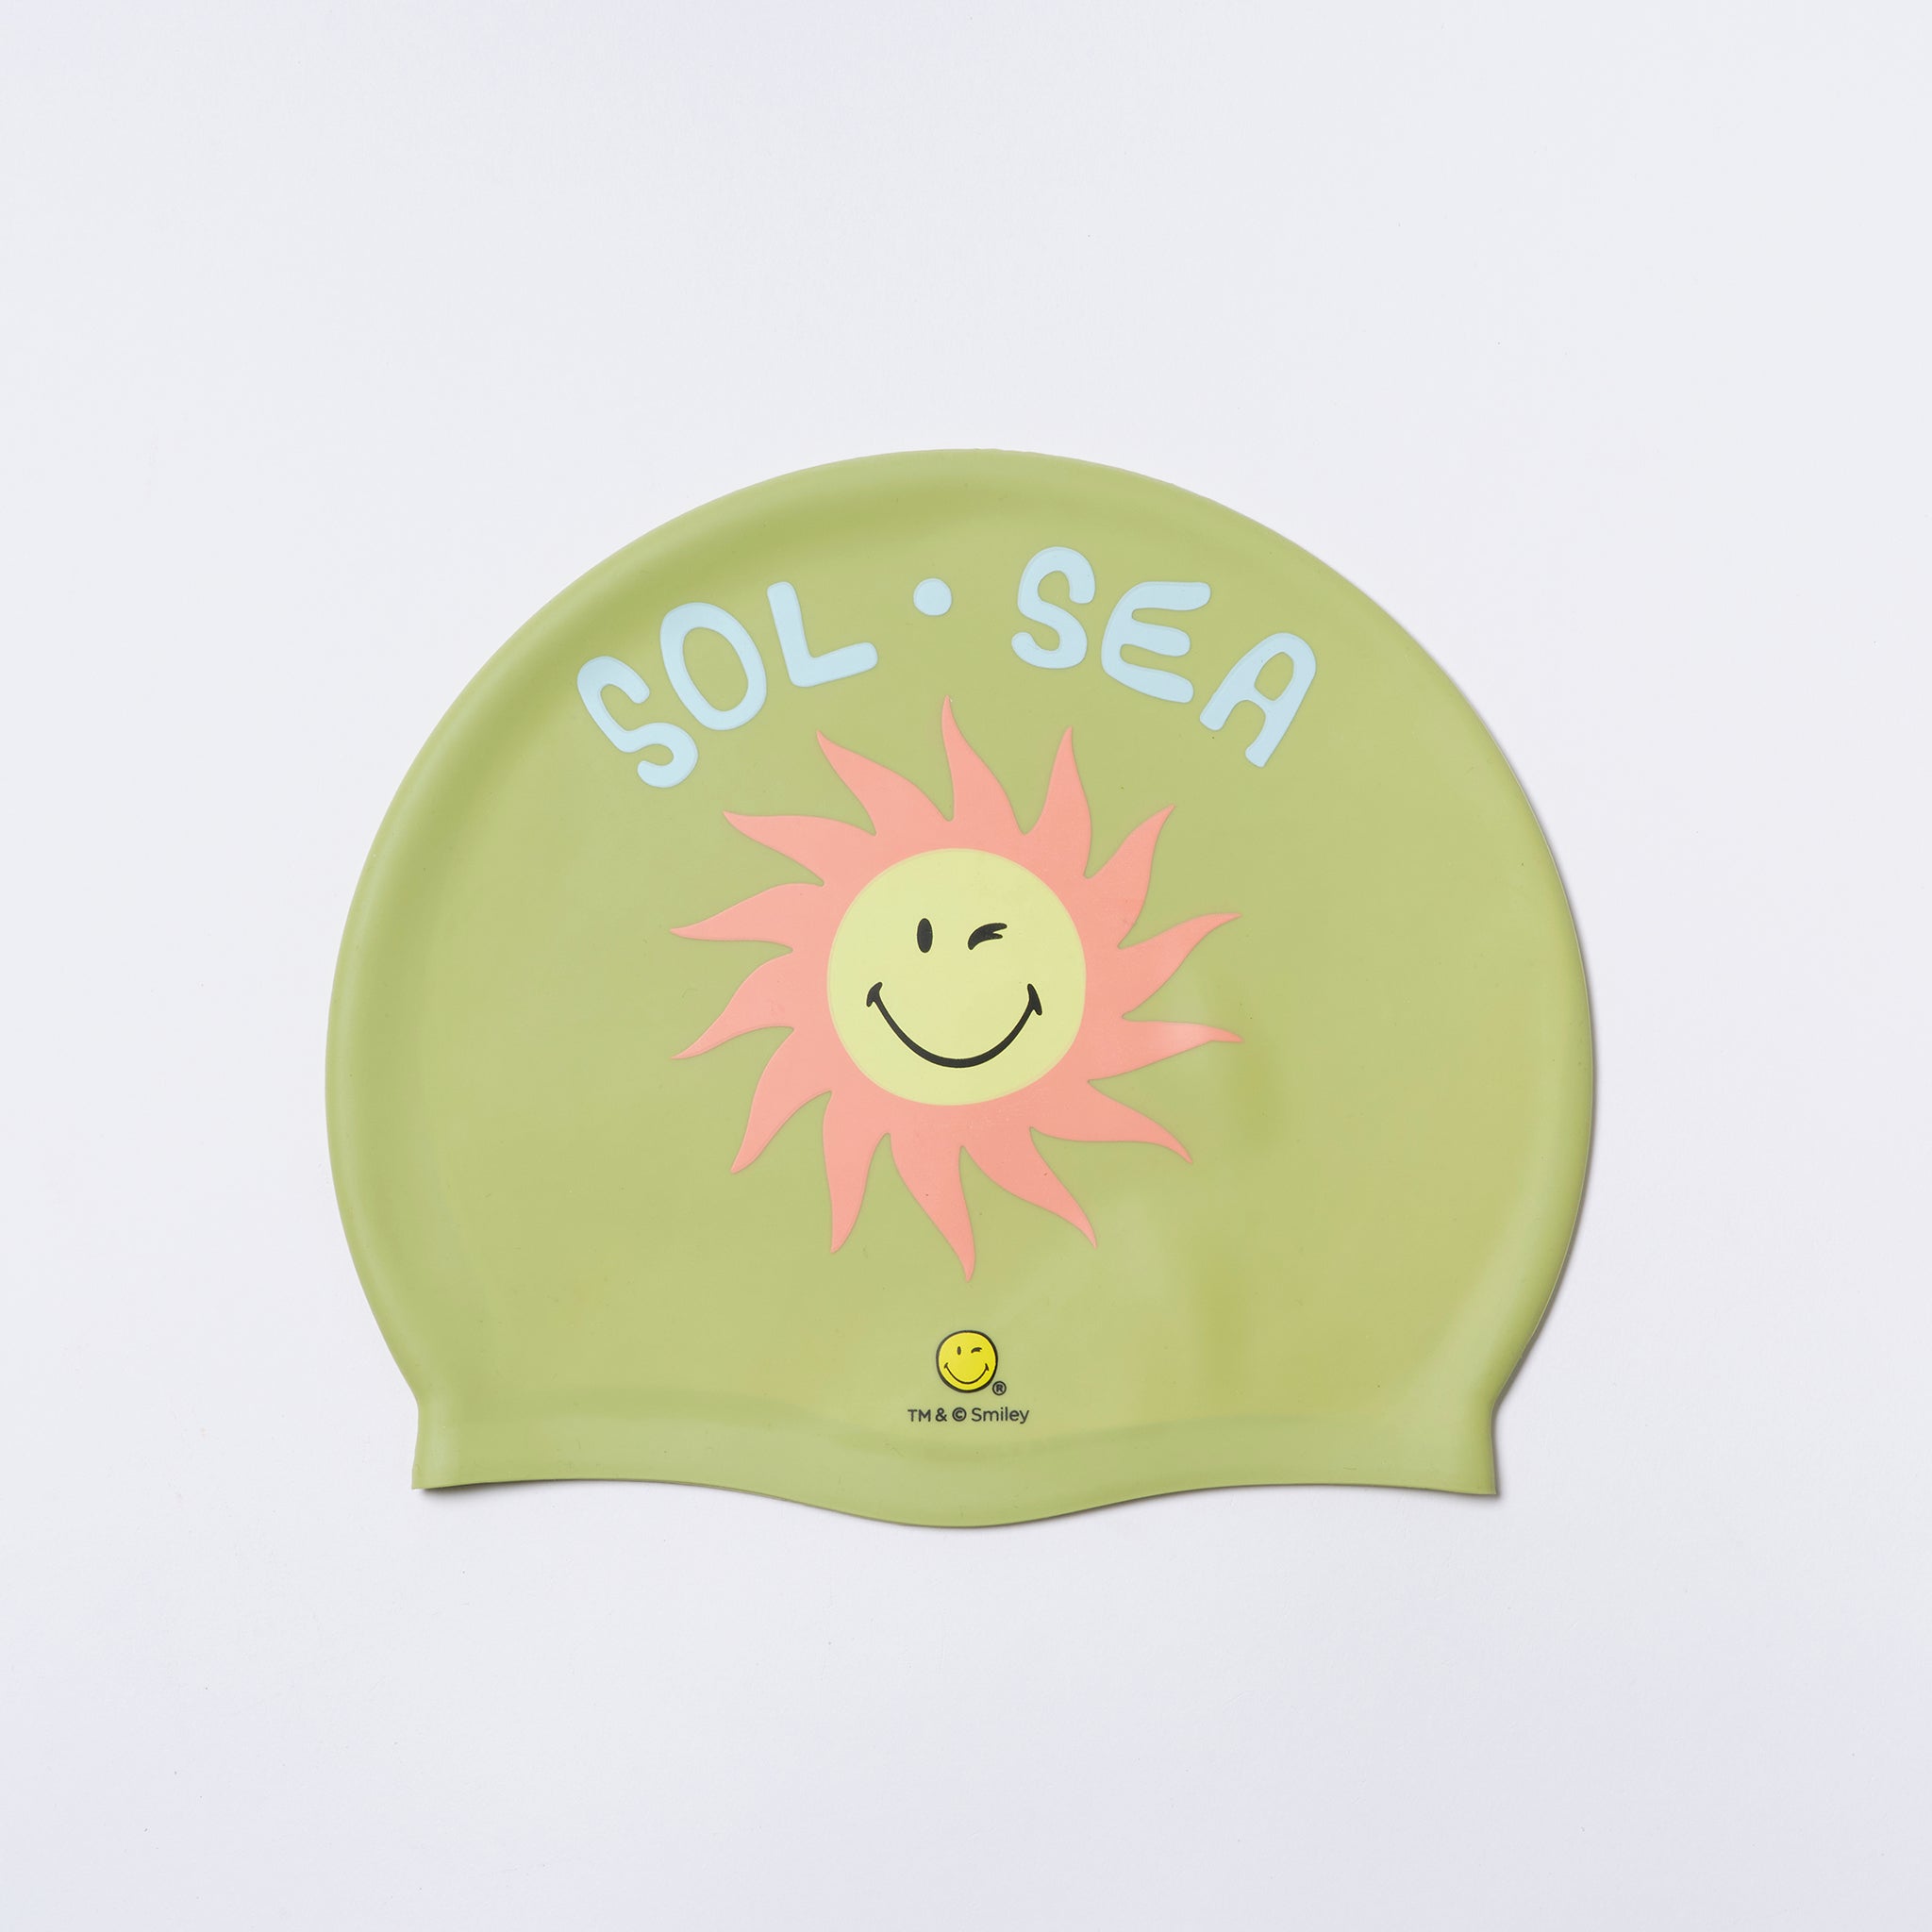 SUNNYLiFE |Swimming Cap | SMILEY World Sol Sea